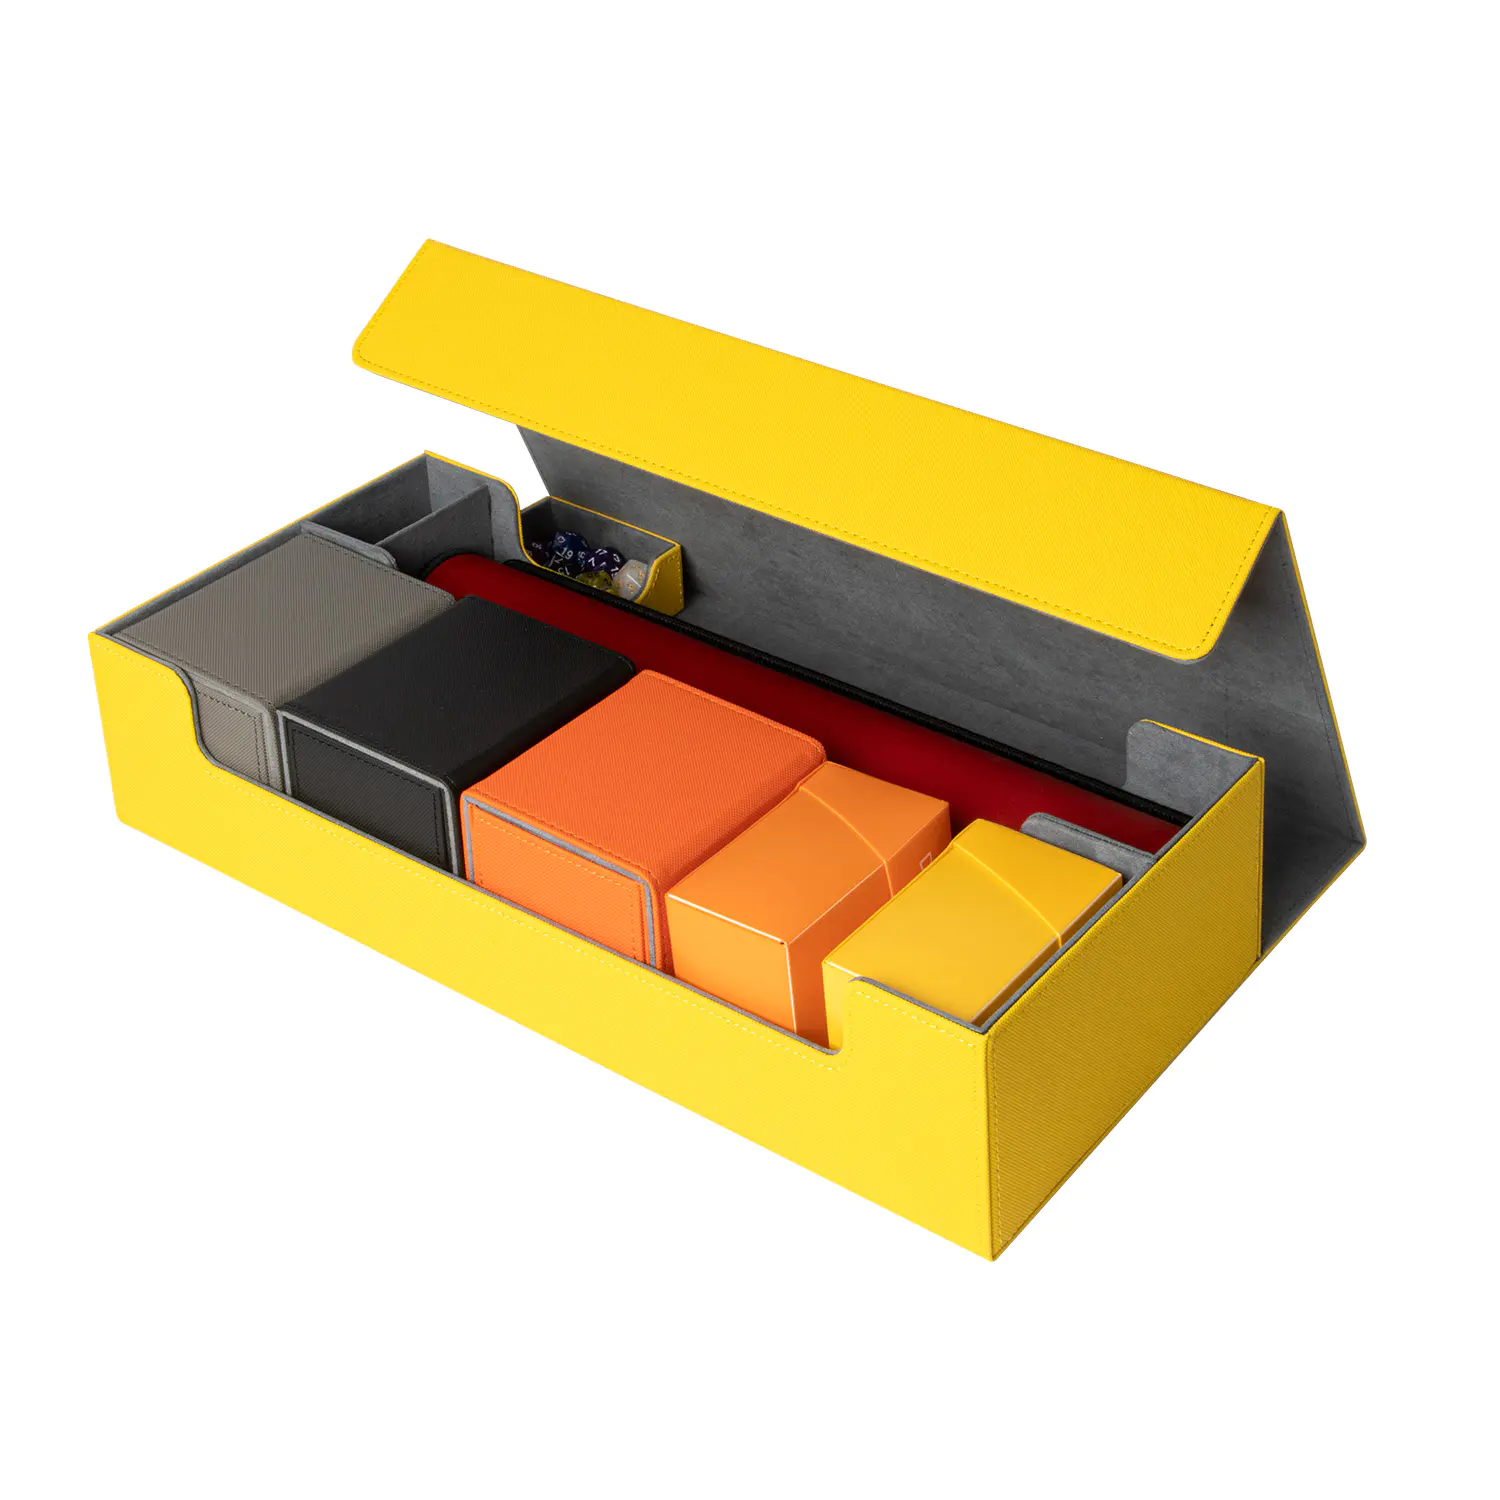 550 Premium PU Couro Deck Case Card Protector Card Deck Caixa de Armazenamento - Amarelo